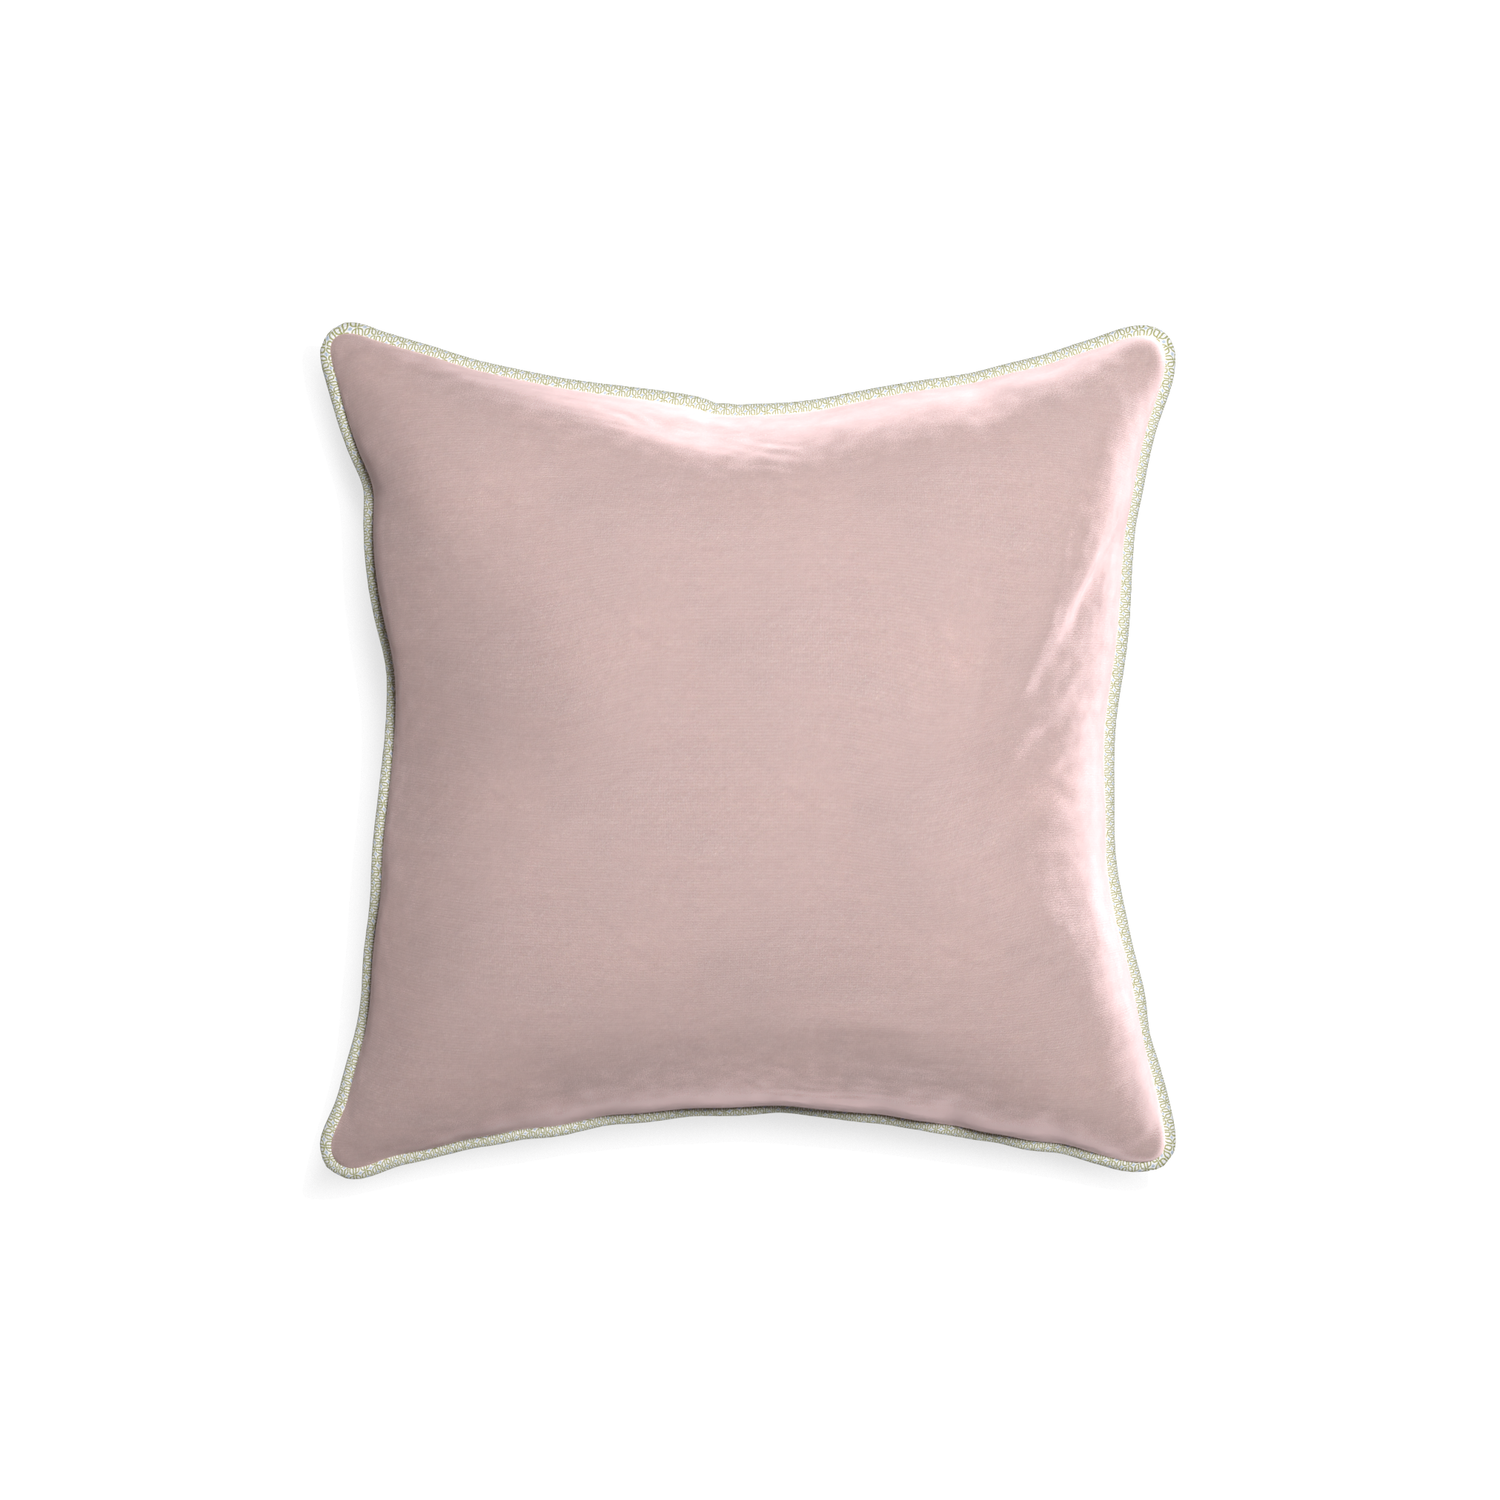 18-square rose velvet custom pillow with l piping on white background